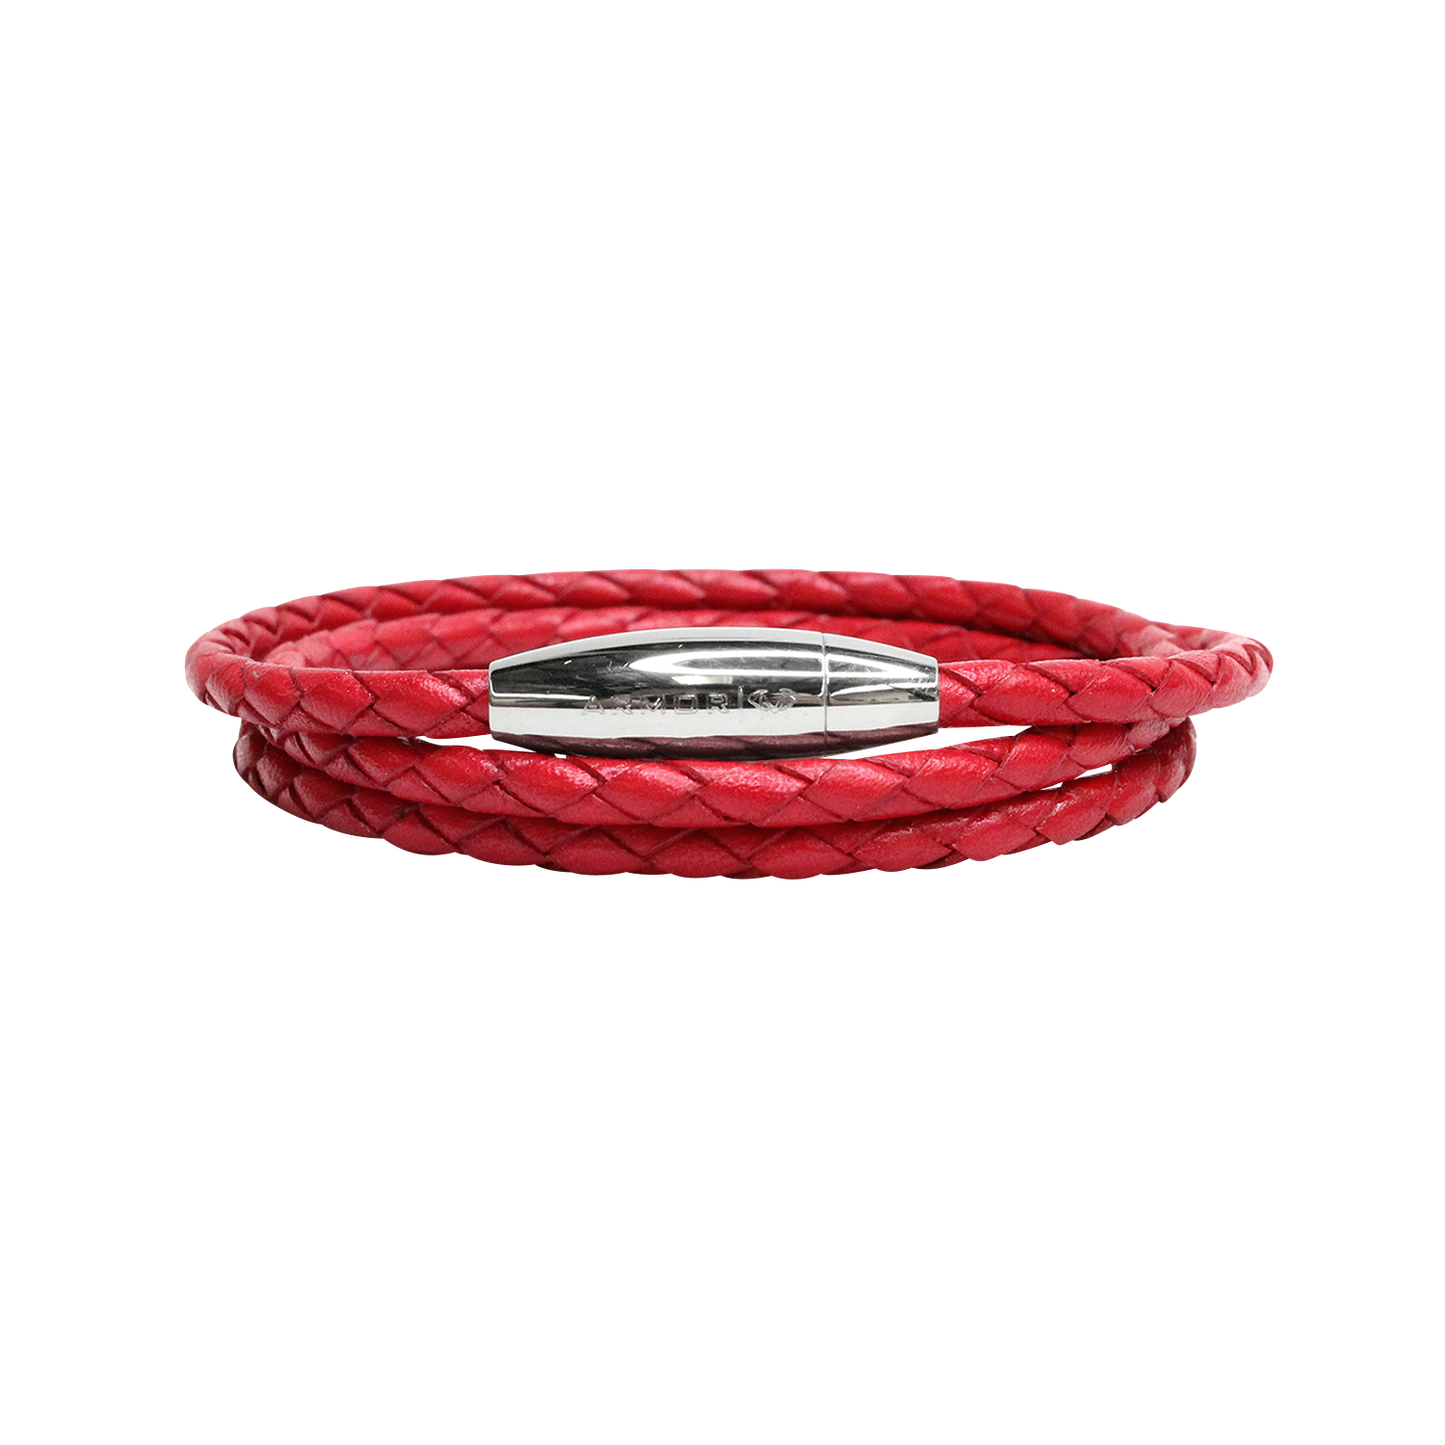 Kenton Michael Braided Red Leather Bracelet